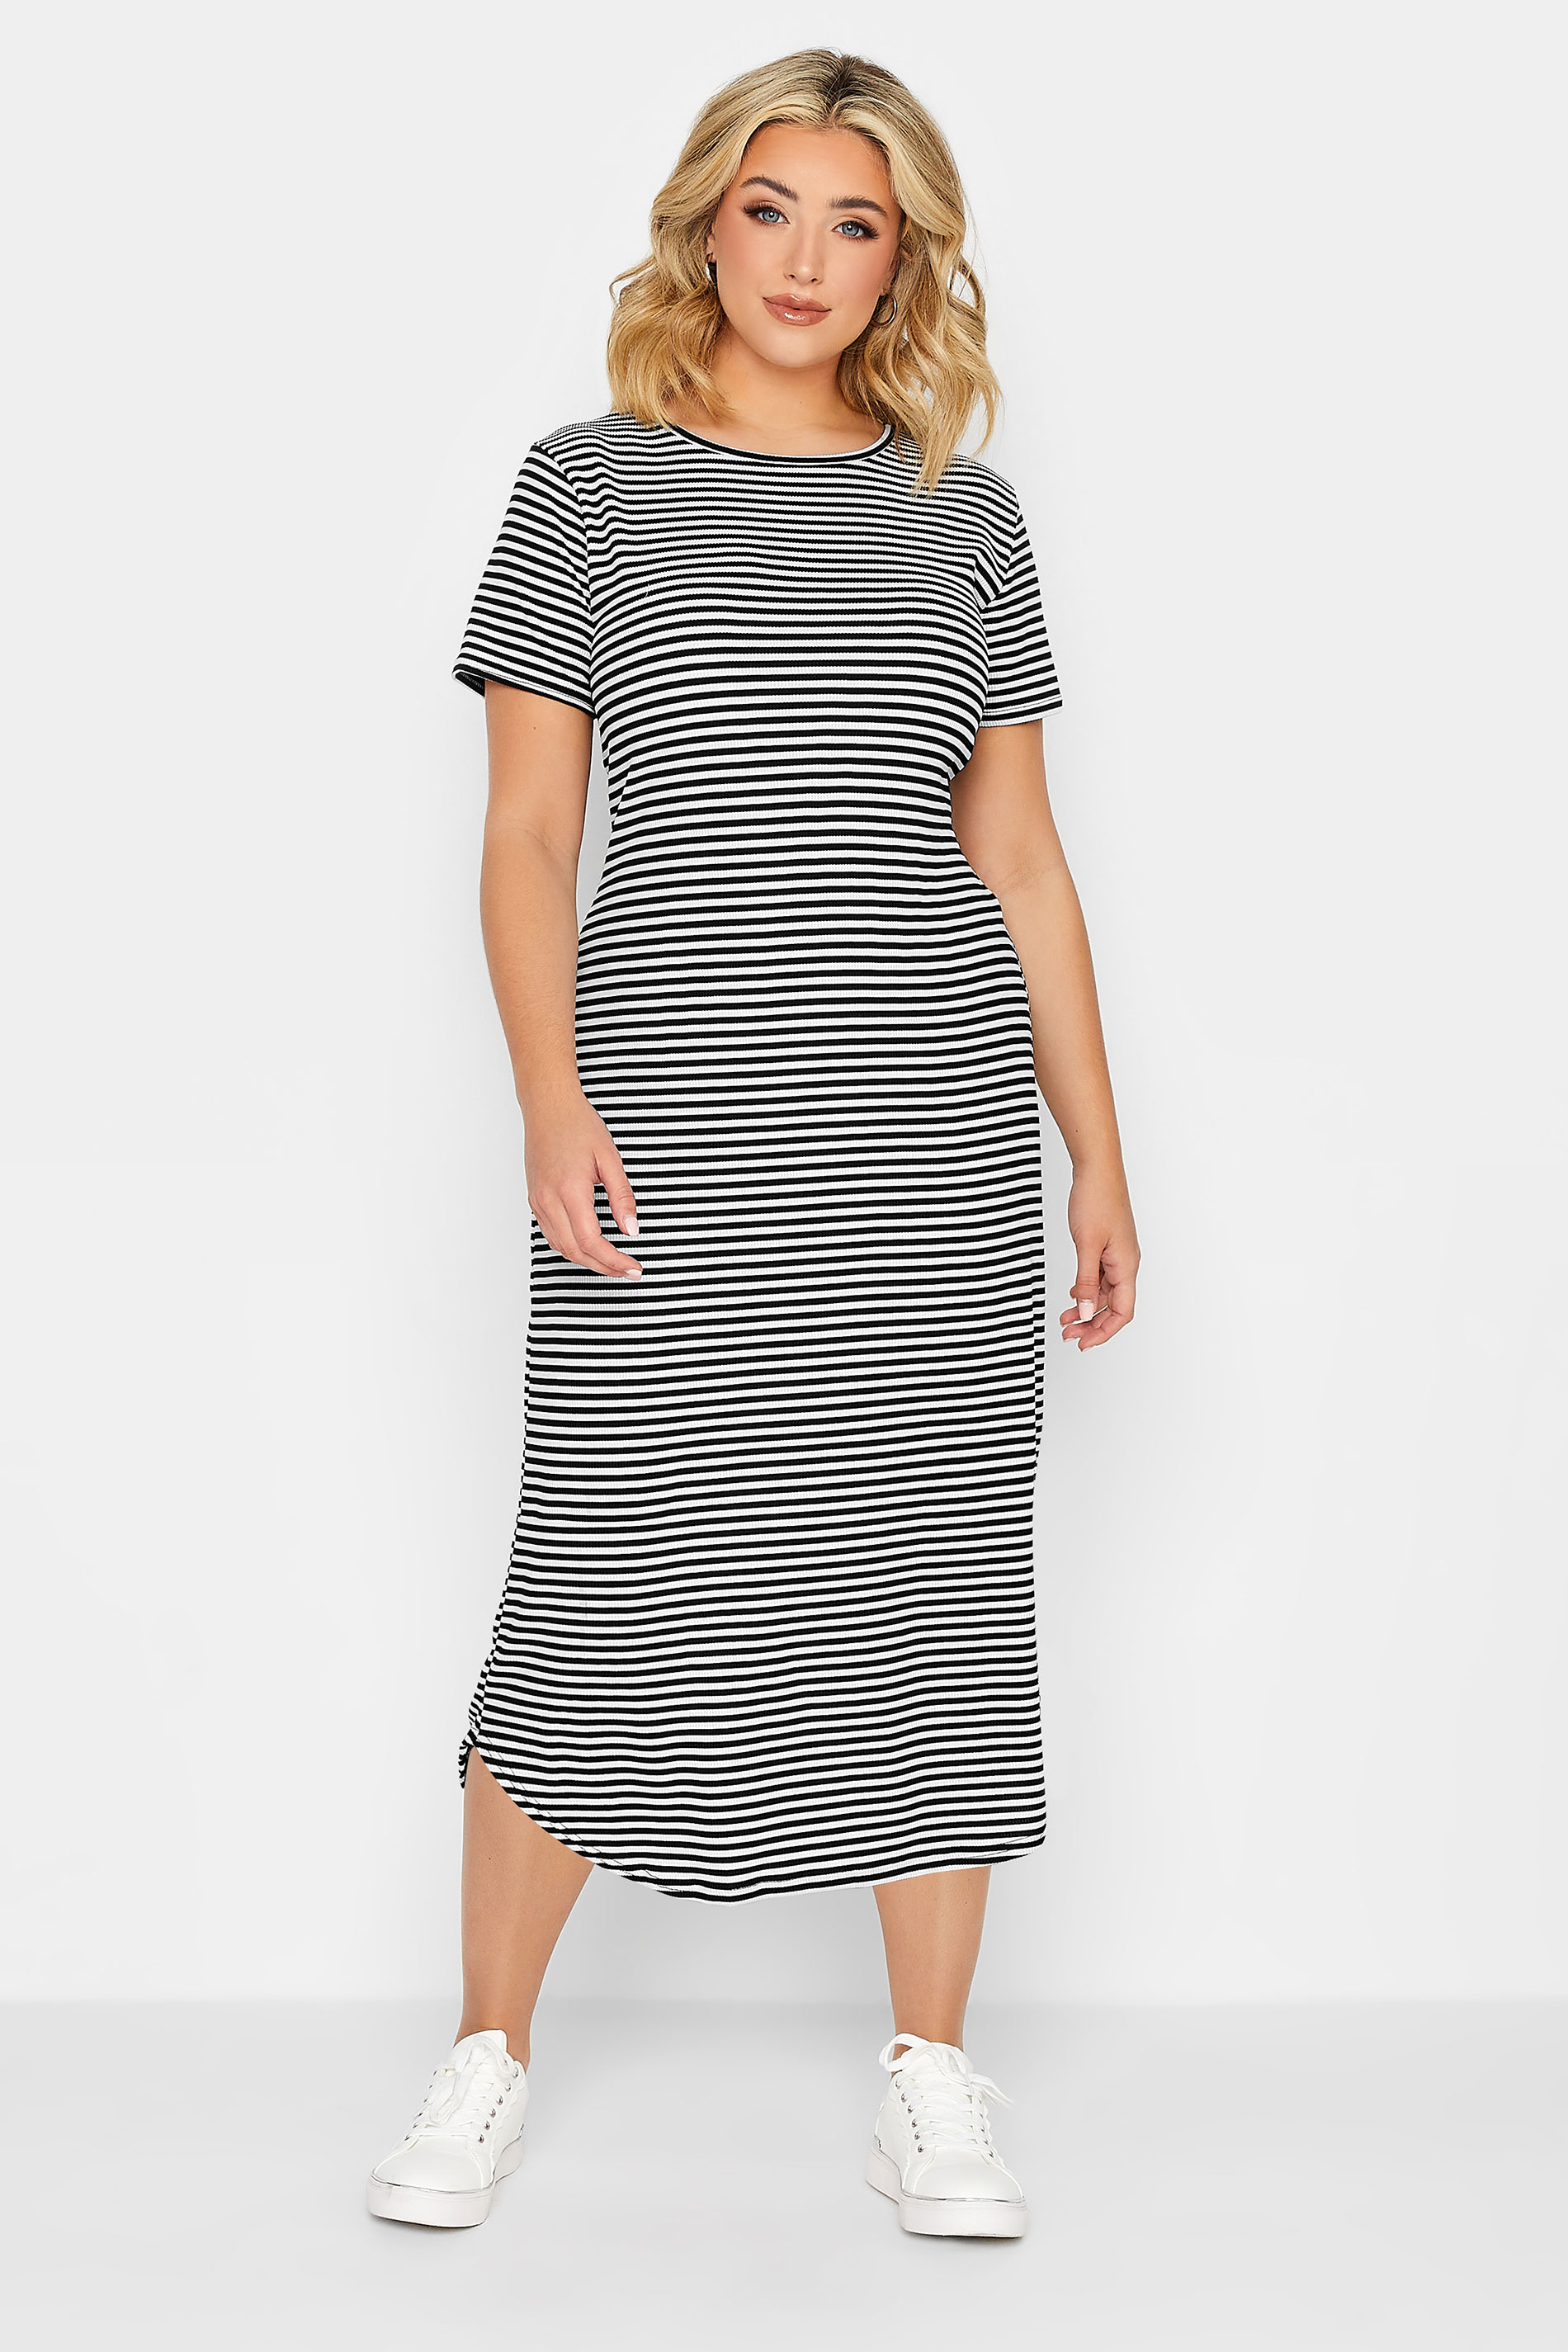 YOURS PETITE Plus Size Black Stripe Midaxi Dress | Yours Clothing 2